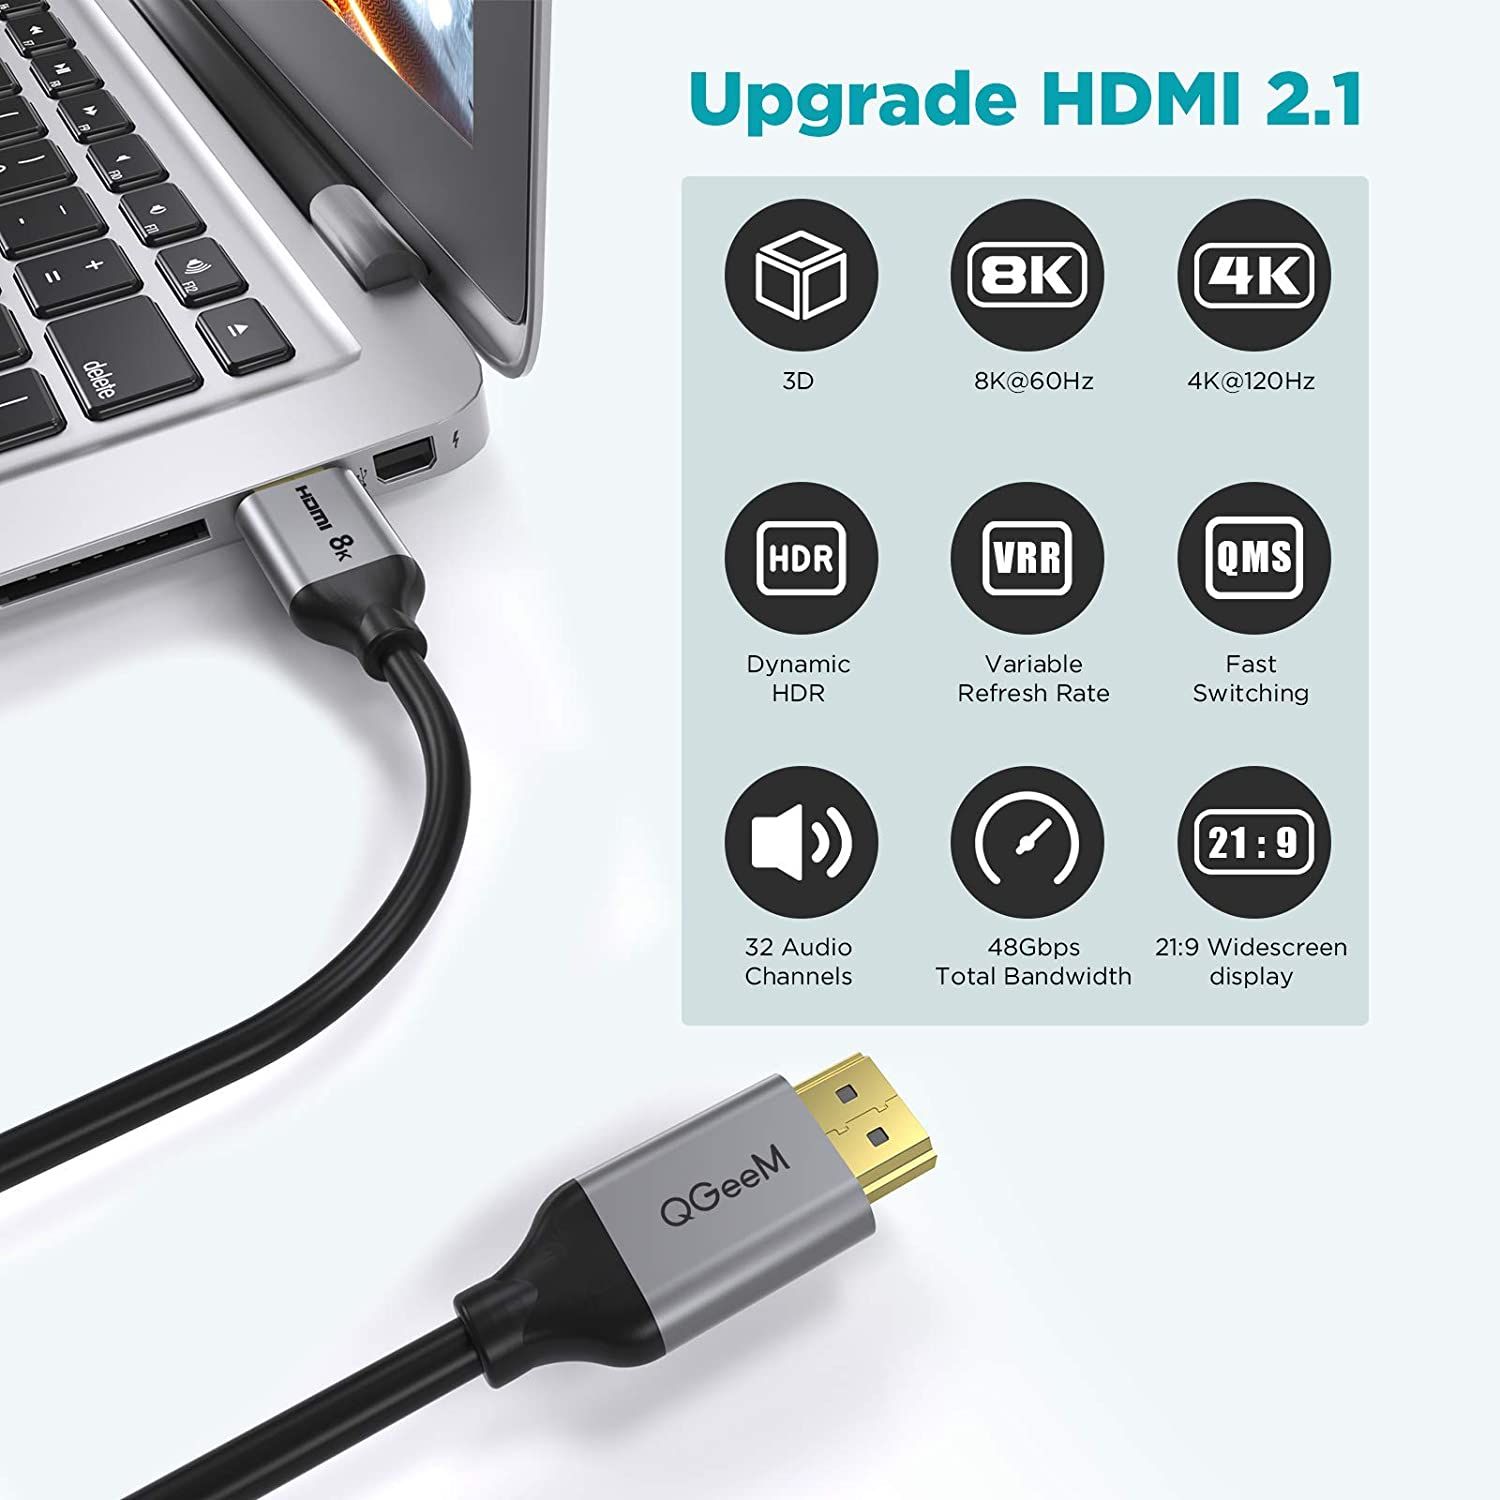 QGeeM 8K HDMI 2.1 Cable features